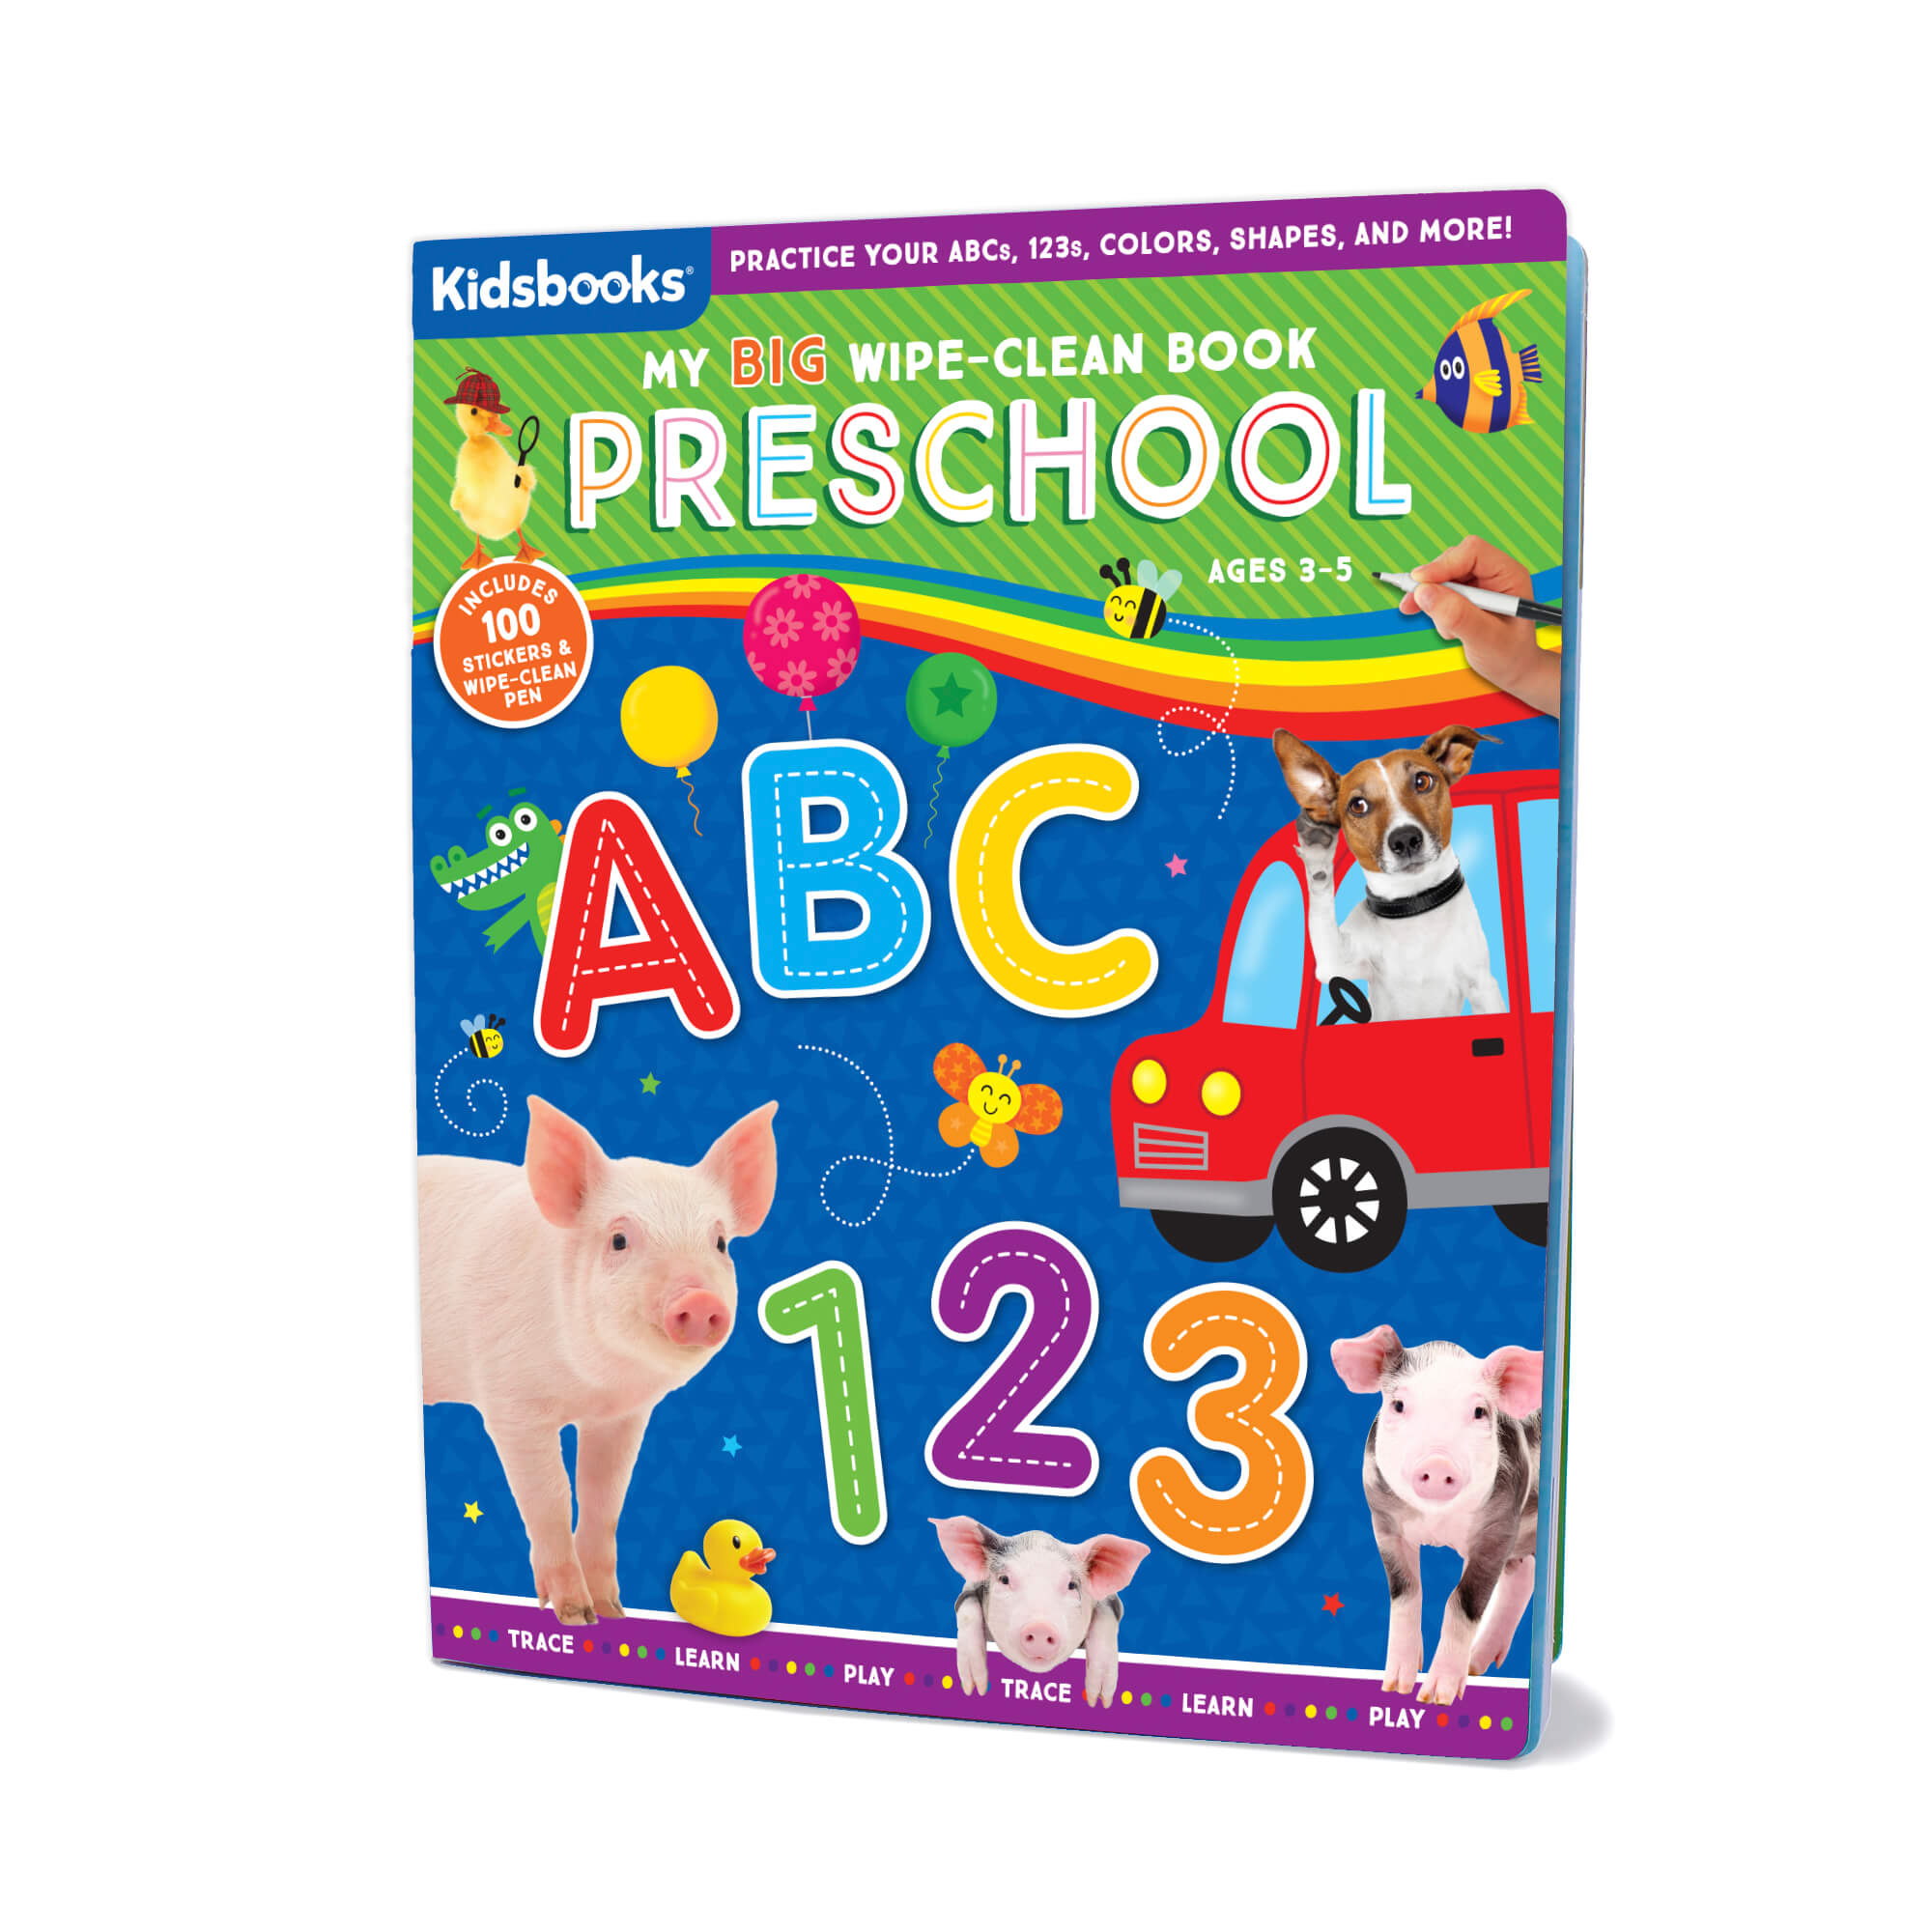 https://kidsbookspublishing.com/wp-content/uploads/2020/08/MBWC_Preschool_3D_Mock-Up-1.jpg